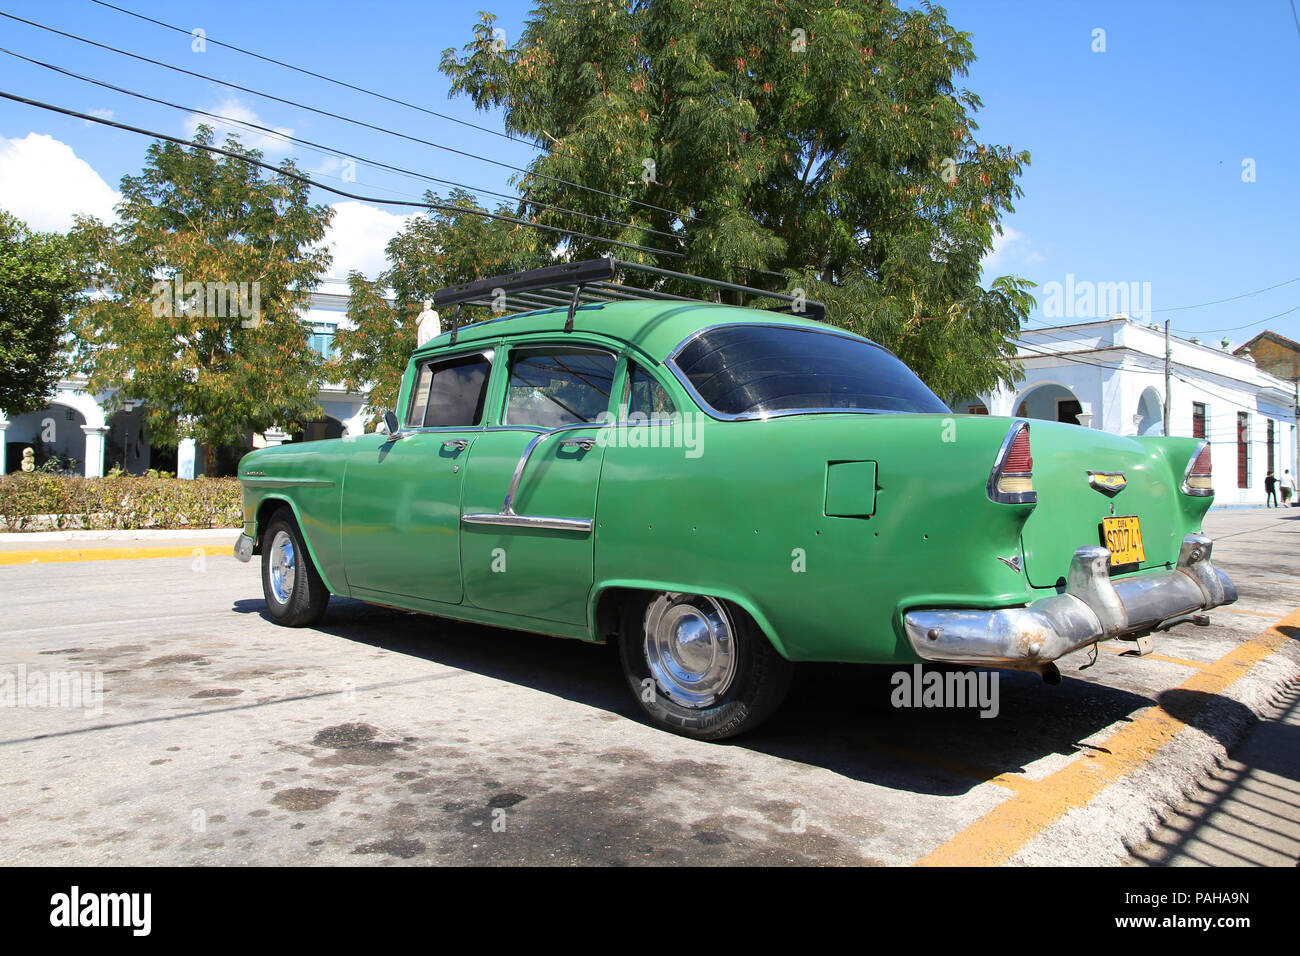 SANCTI SPIRITUS, CUBA - FEBRUARY 6: Classic American Chevrolet car in the street on February 6, 2011 in Sancti Spiritus, Cuba. The multitude of oldtim Stock Photo